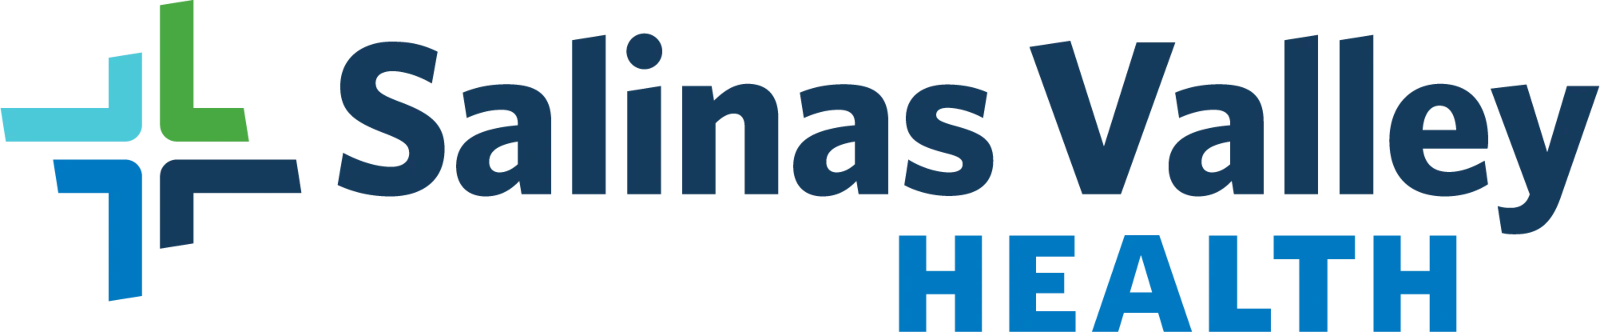 Salinas Valley Health Logo